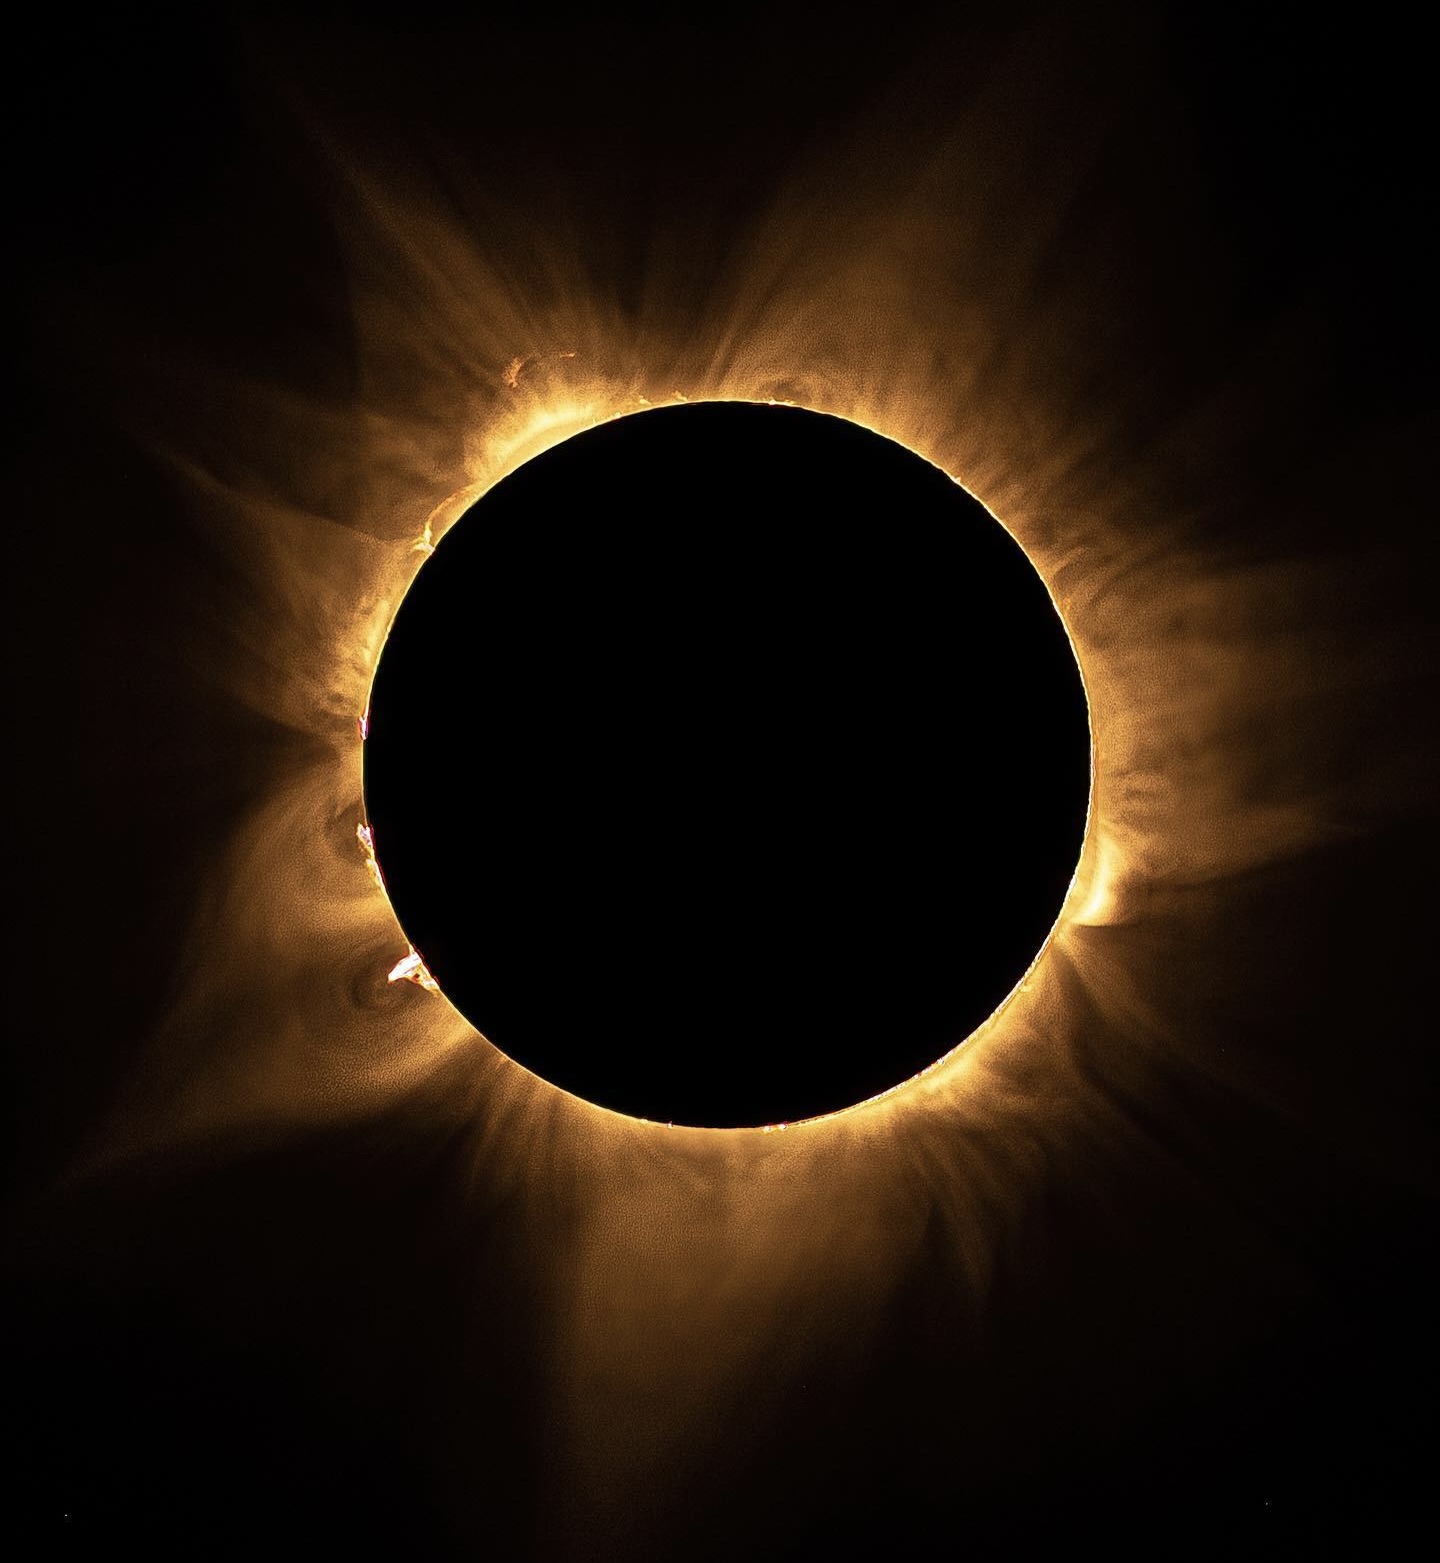 When is Australia's next total solar eclipse? Australian Geographic